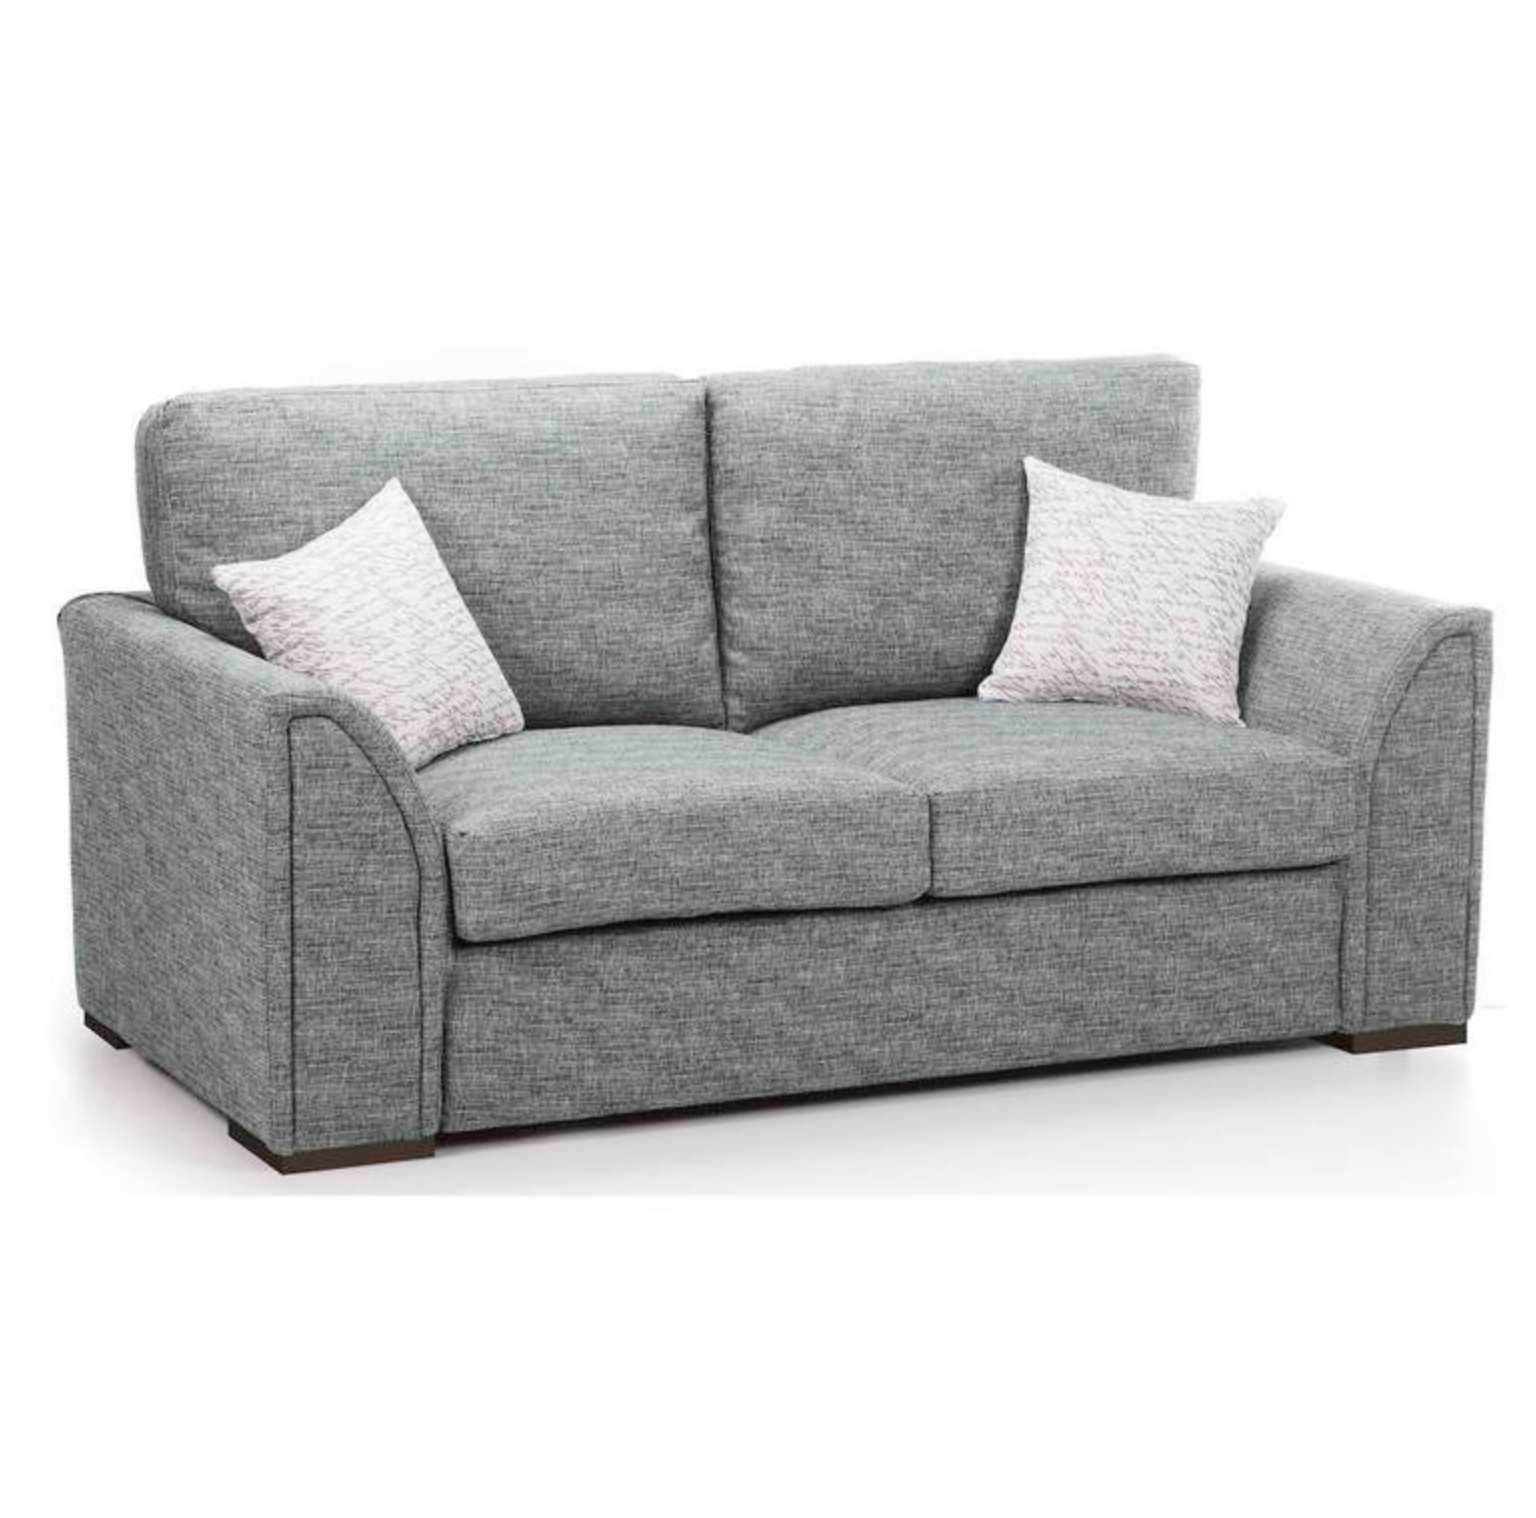 Healy 2 Seater Sofa Como Charcoal Fabric